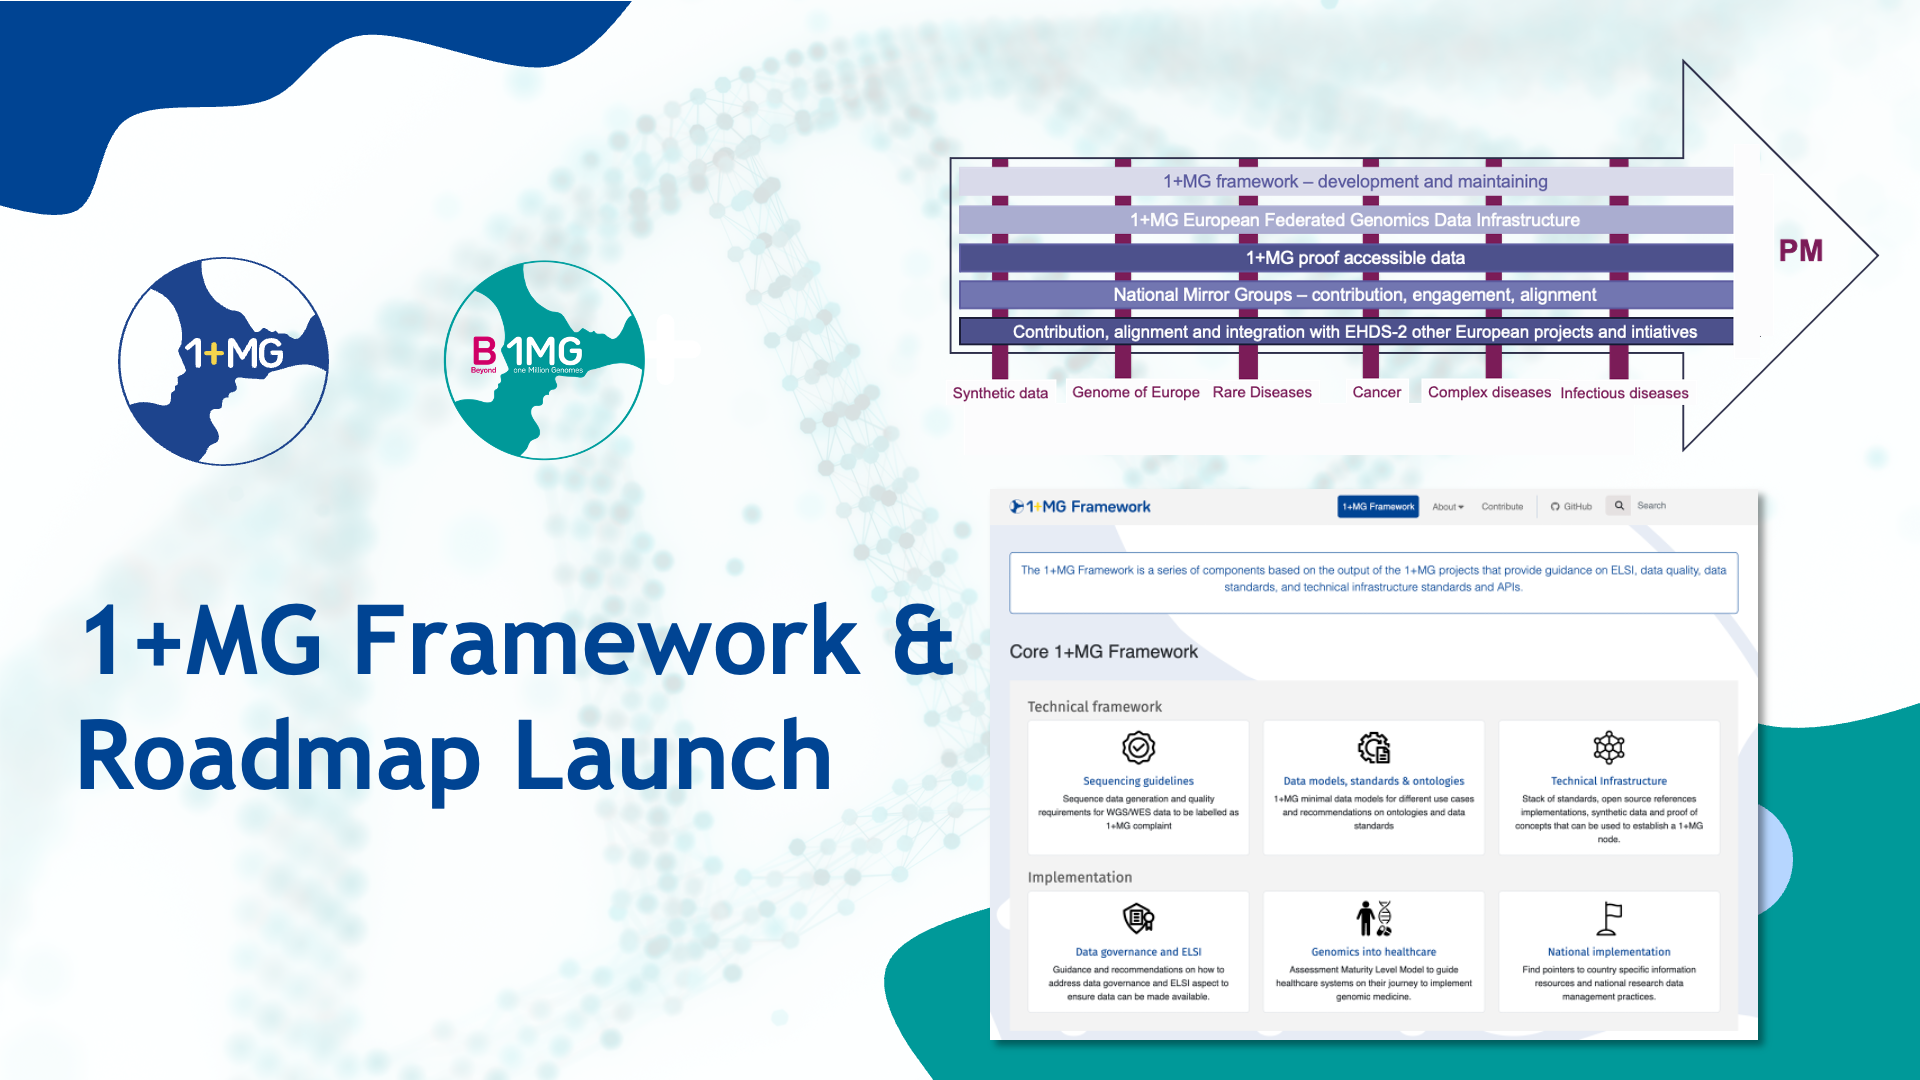 1+MG Framework and roadmap launch